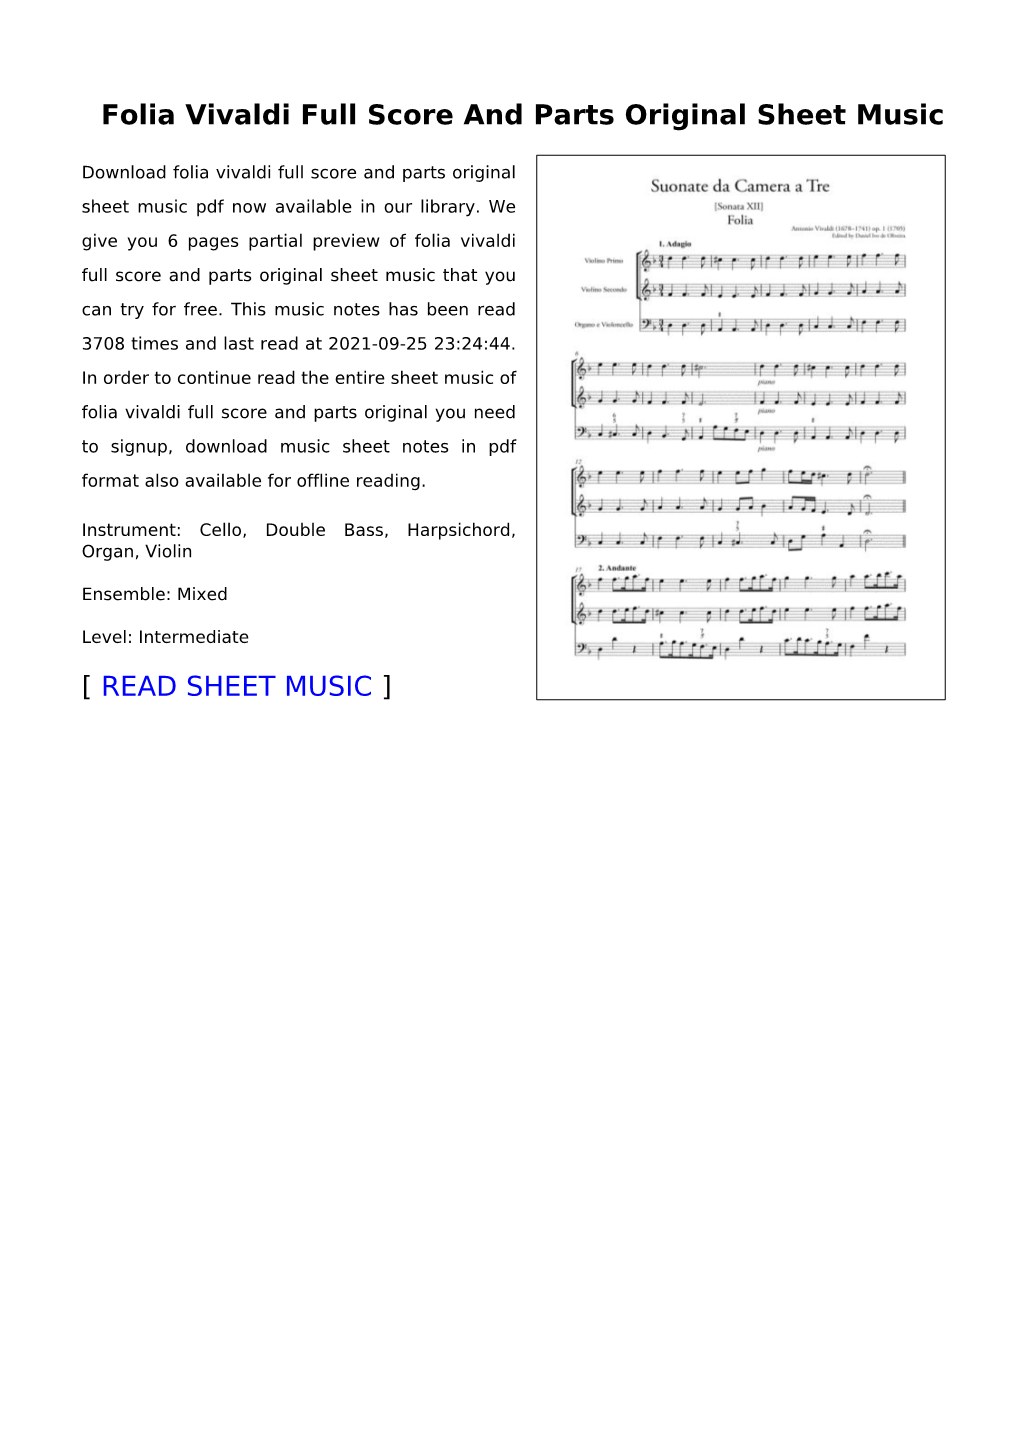 Folia Vivaldi Full Score and Parts Original Sheet Music